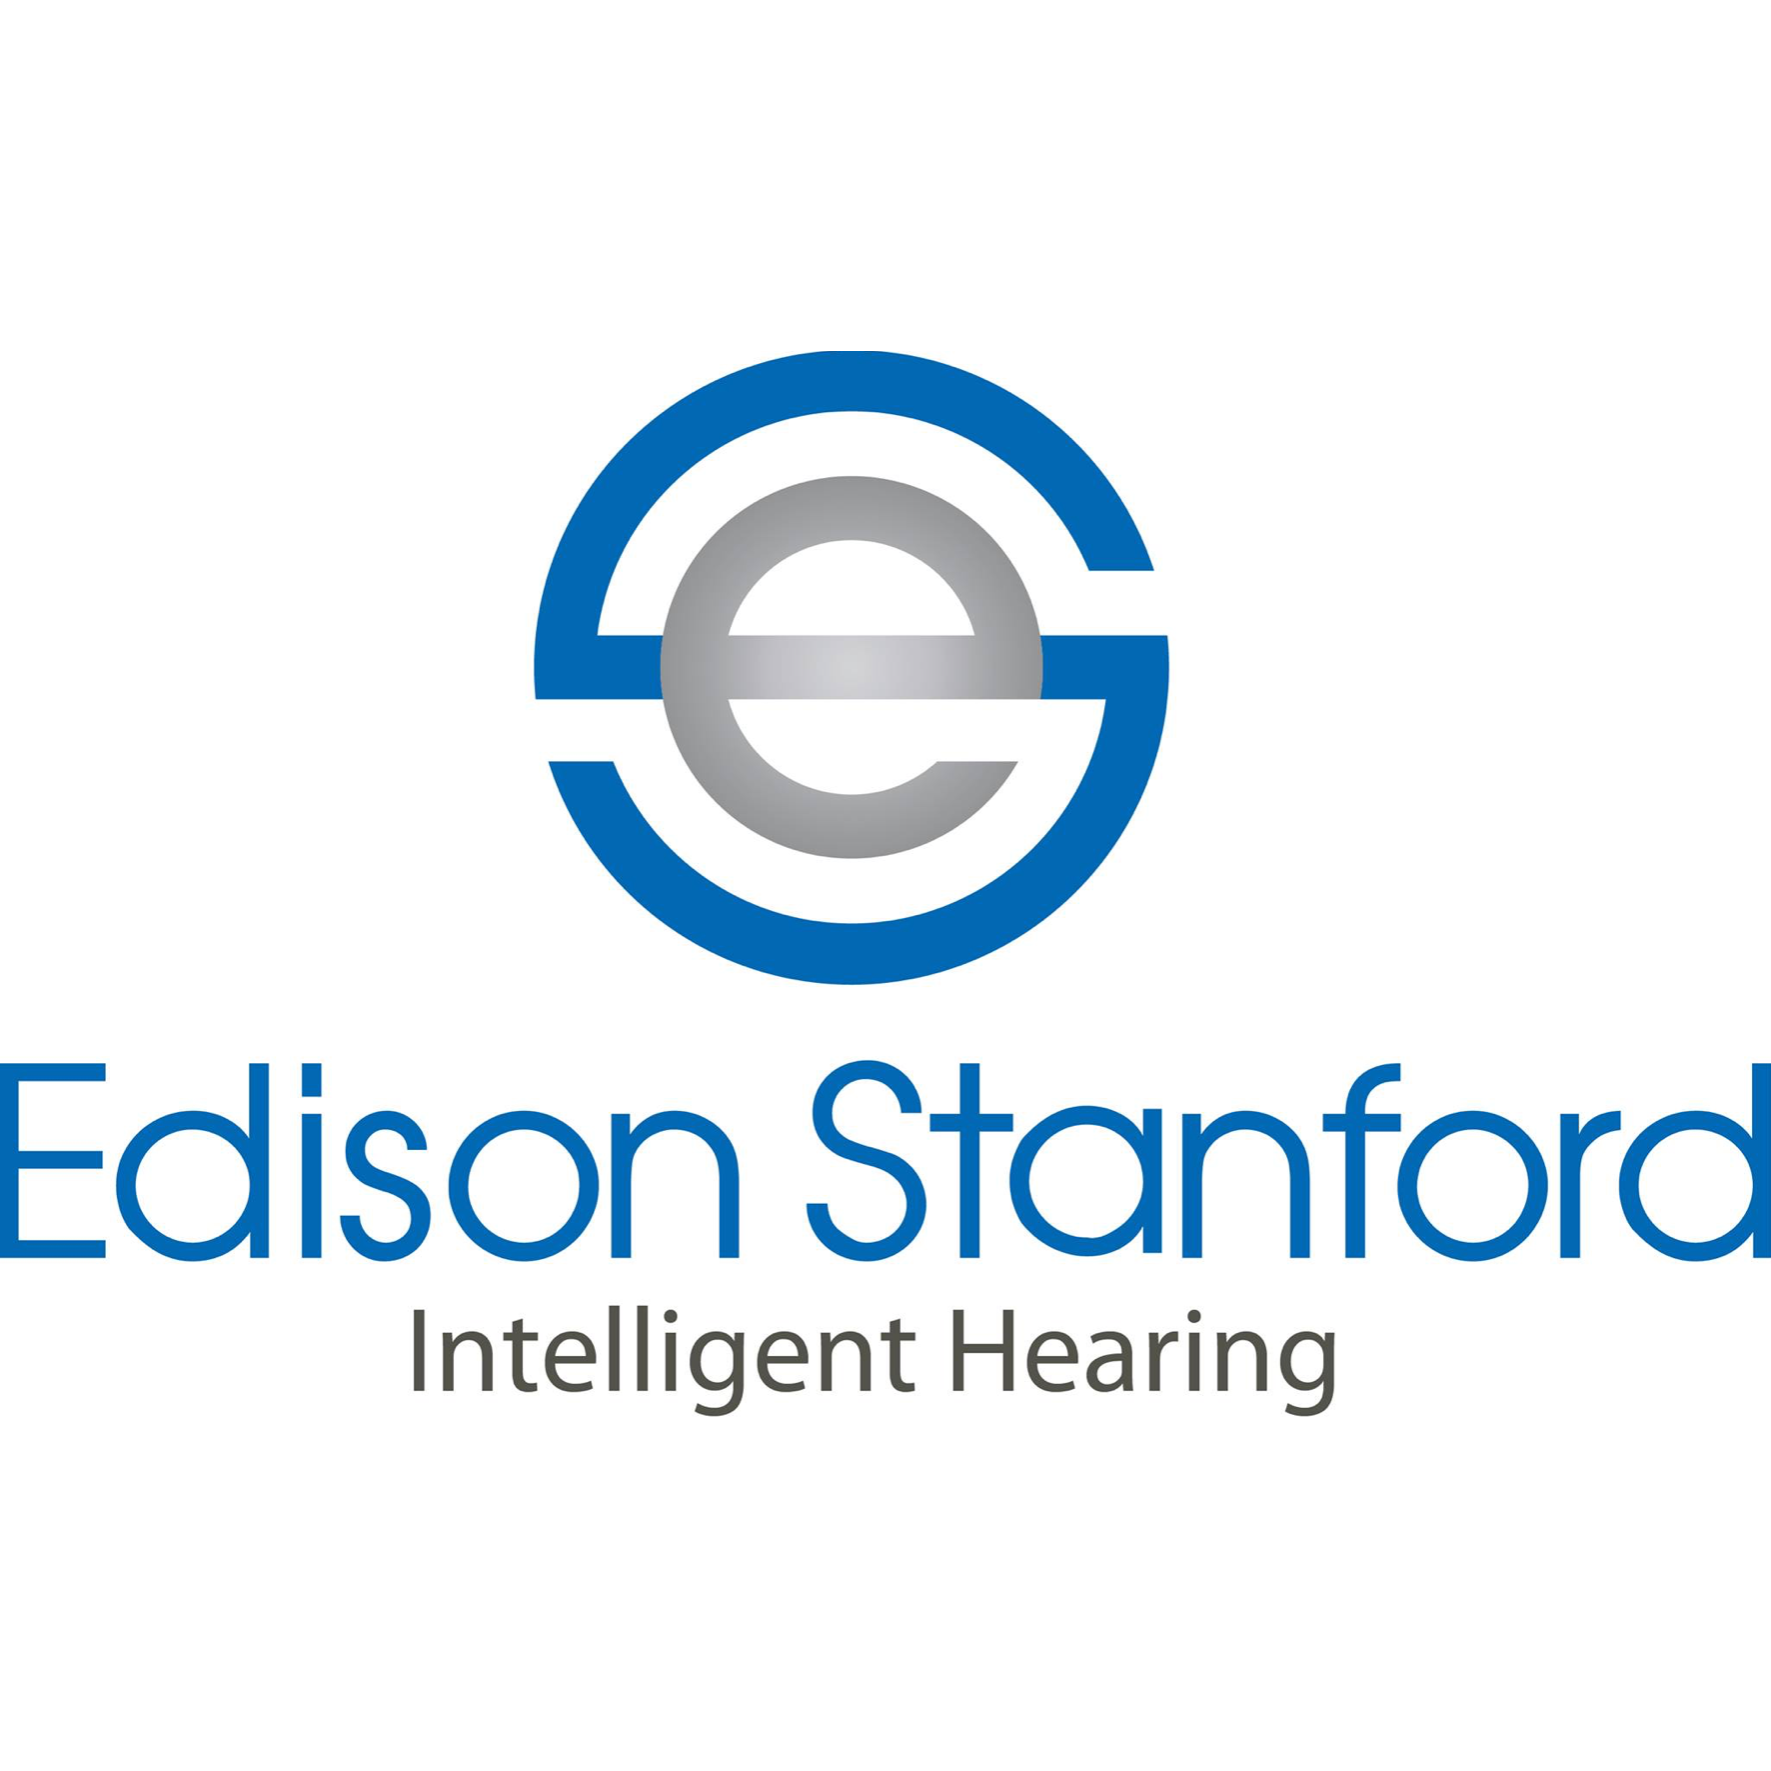 Edison Stanford Intelligent Hearing’s Salt Lake City Office Edison Stanford Intelligent Hearing Salt Lake City (801)639-9834